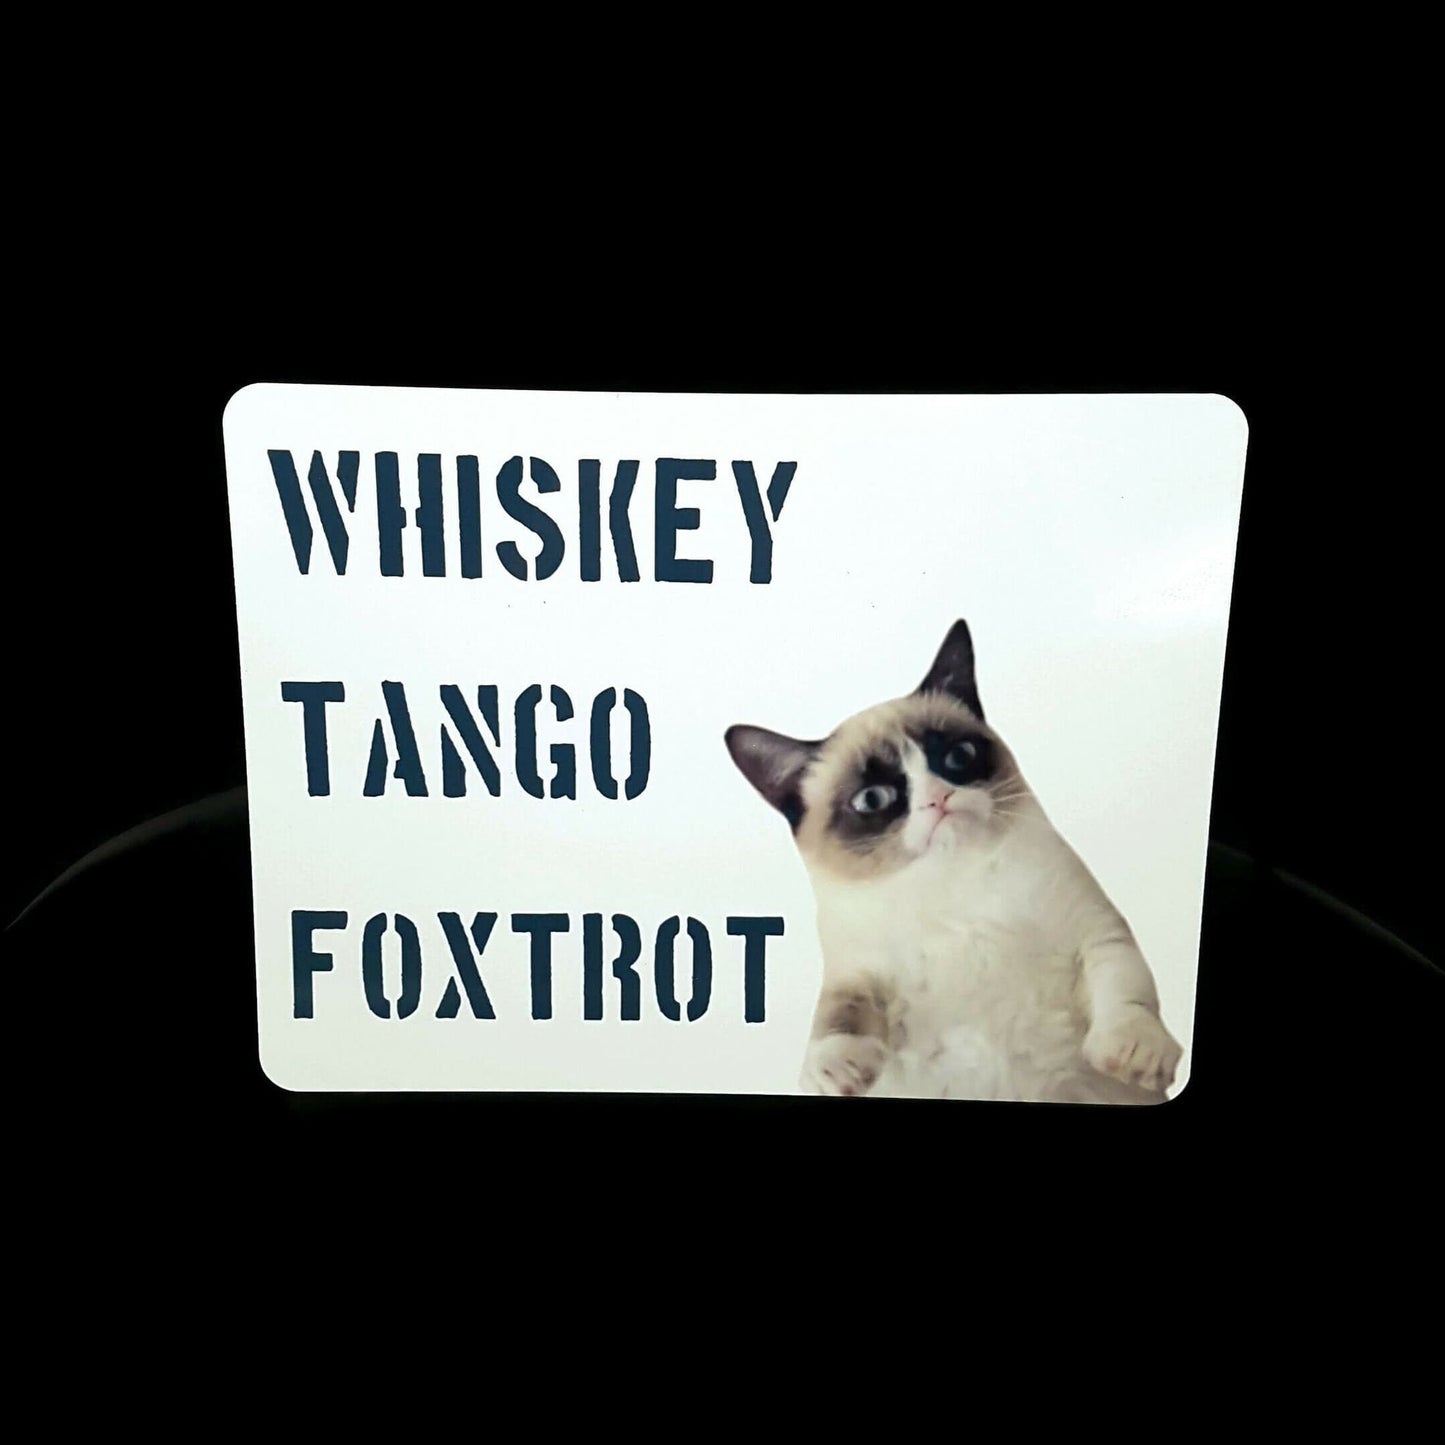 whiskey tango foxtrot funny sign